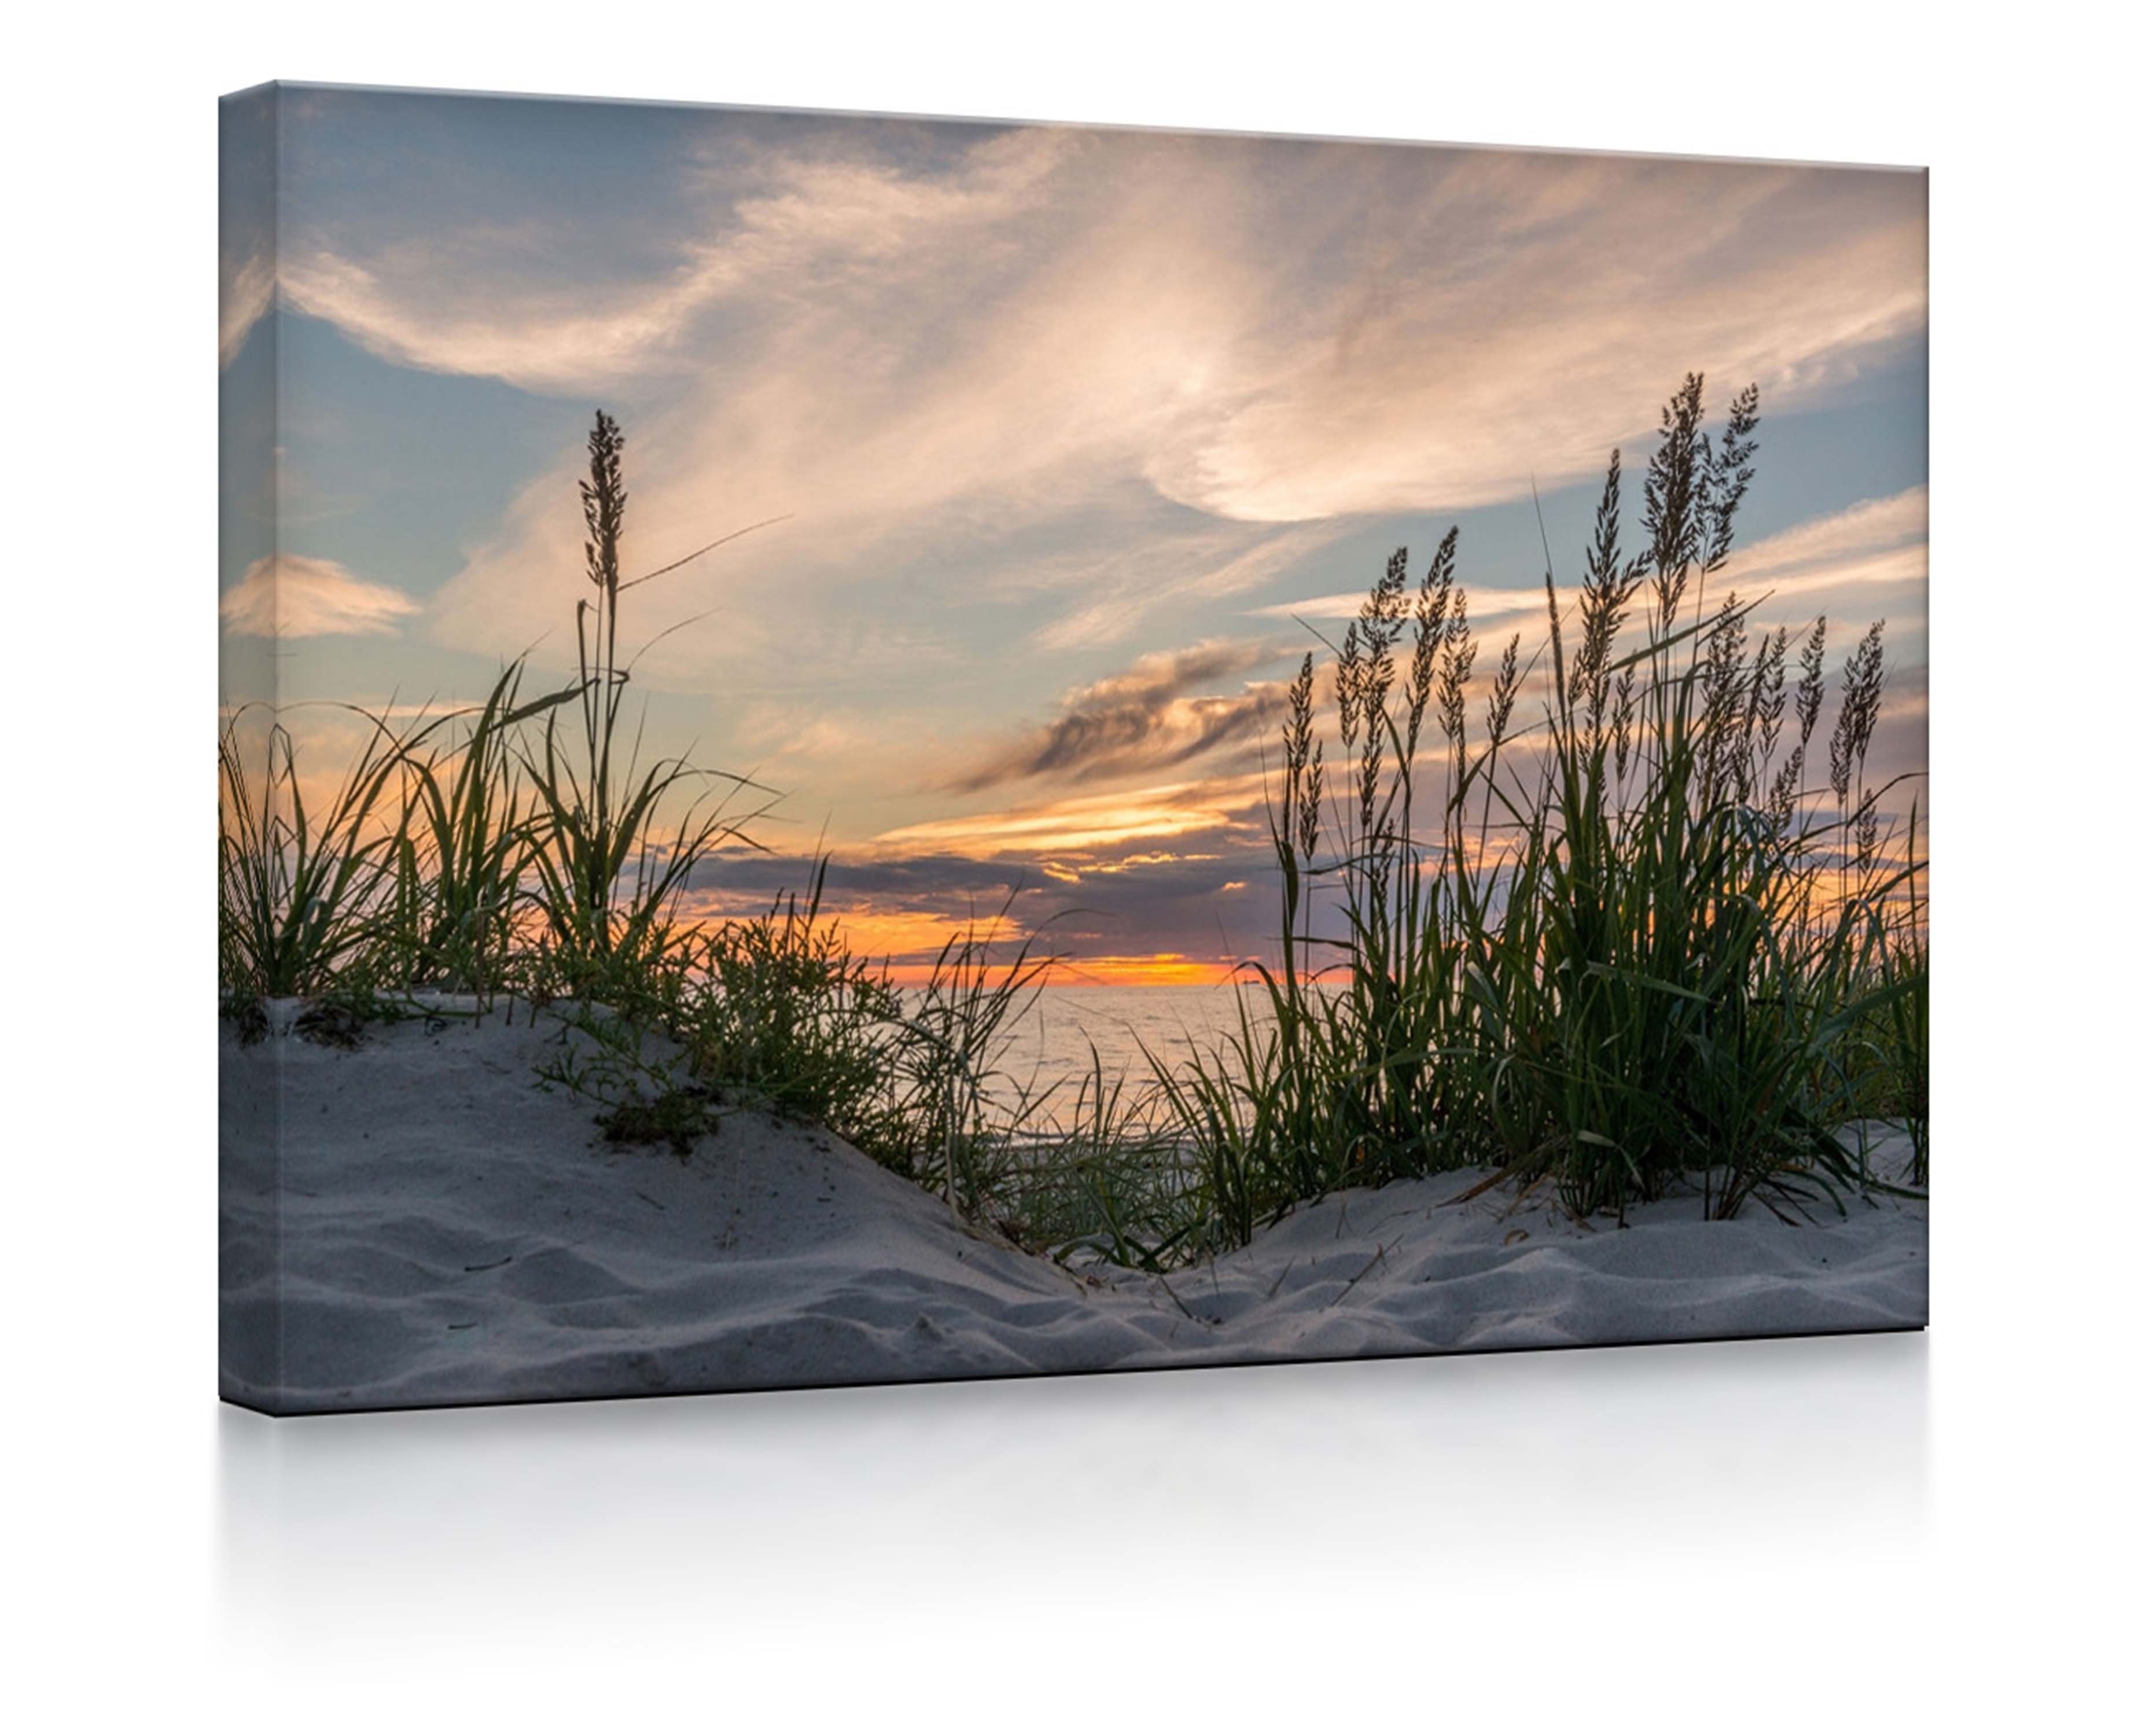 LED-Bild Fernbedienung 60x40cm, front Strand Gras lightbox-multicolor am mit / lighted Leuchtbild Sonnenuntergang bei